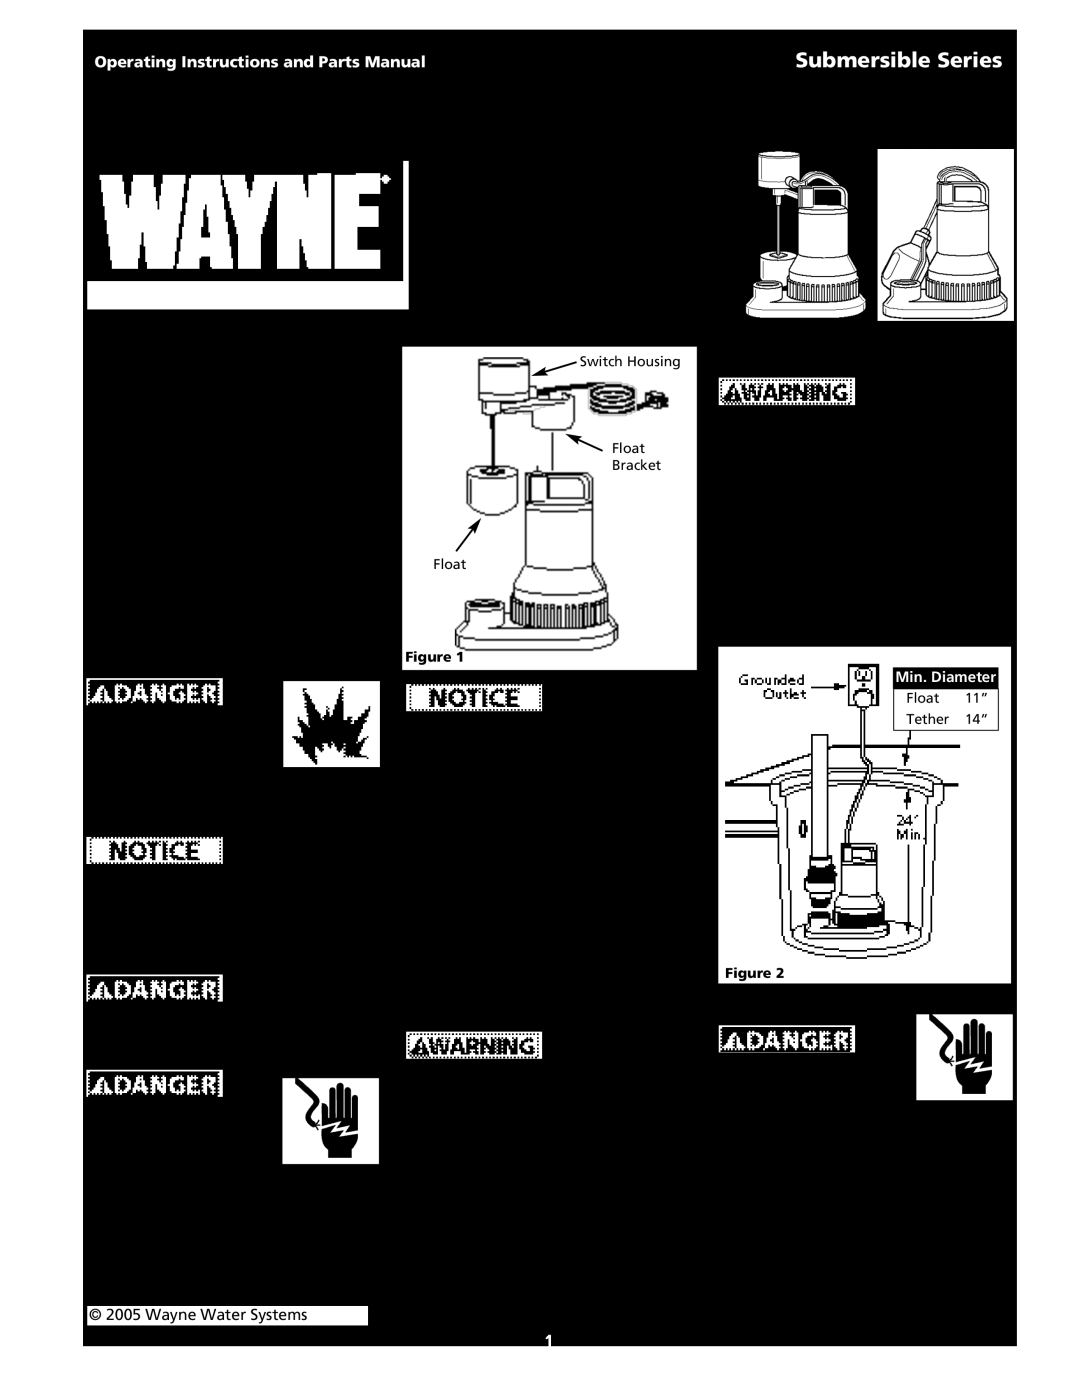 Wayne 350705-001 operating instructions Submersible Sump Pump, Submersible Series, Unpacking, Description, Assembly 